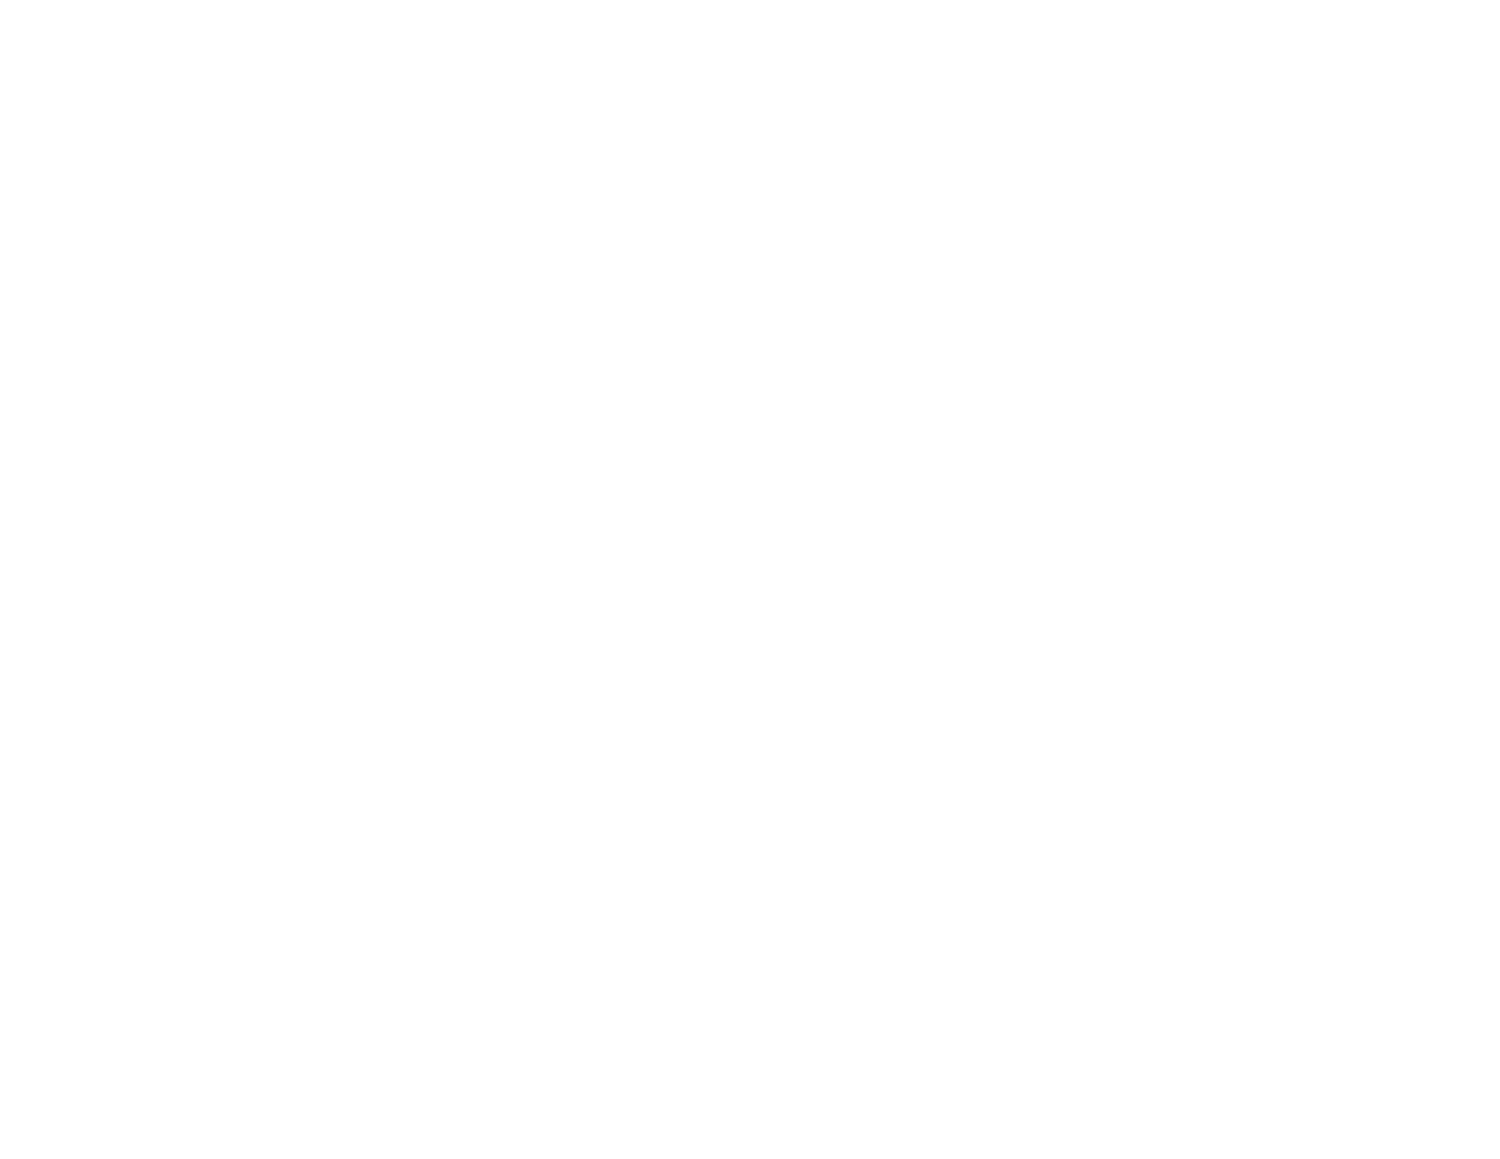 M+A Development